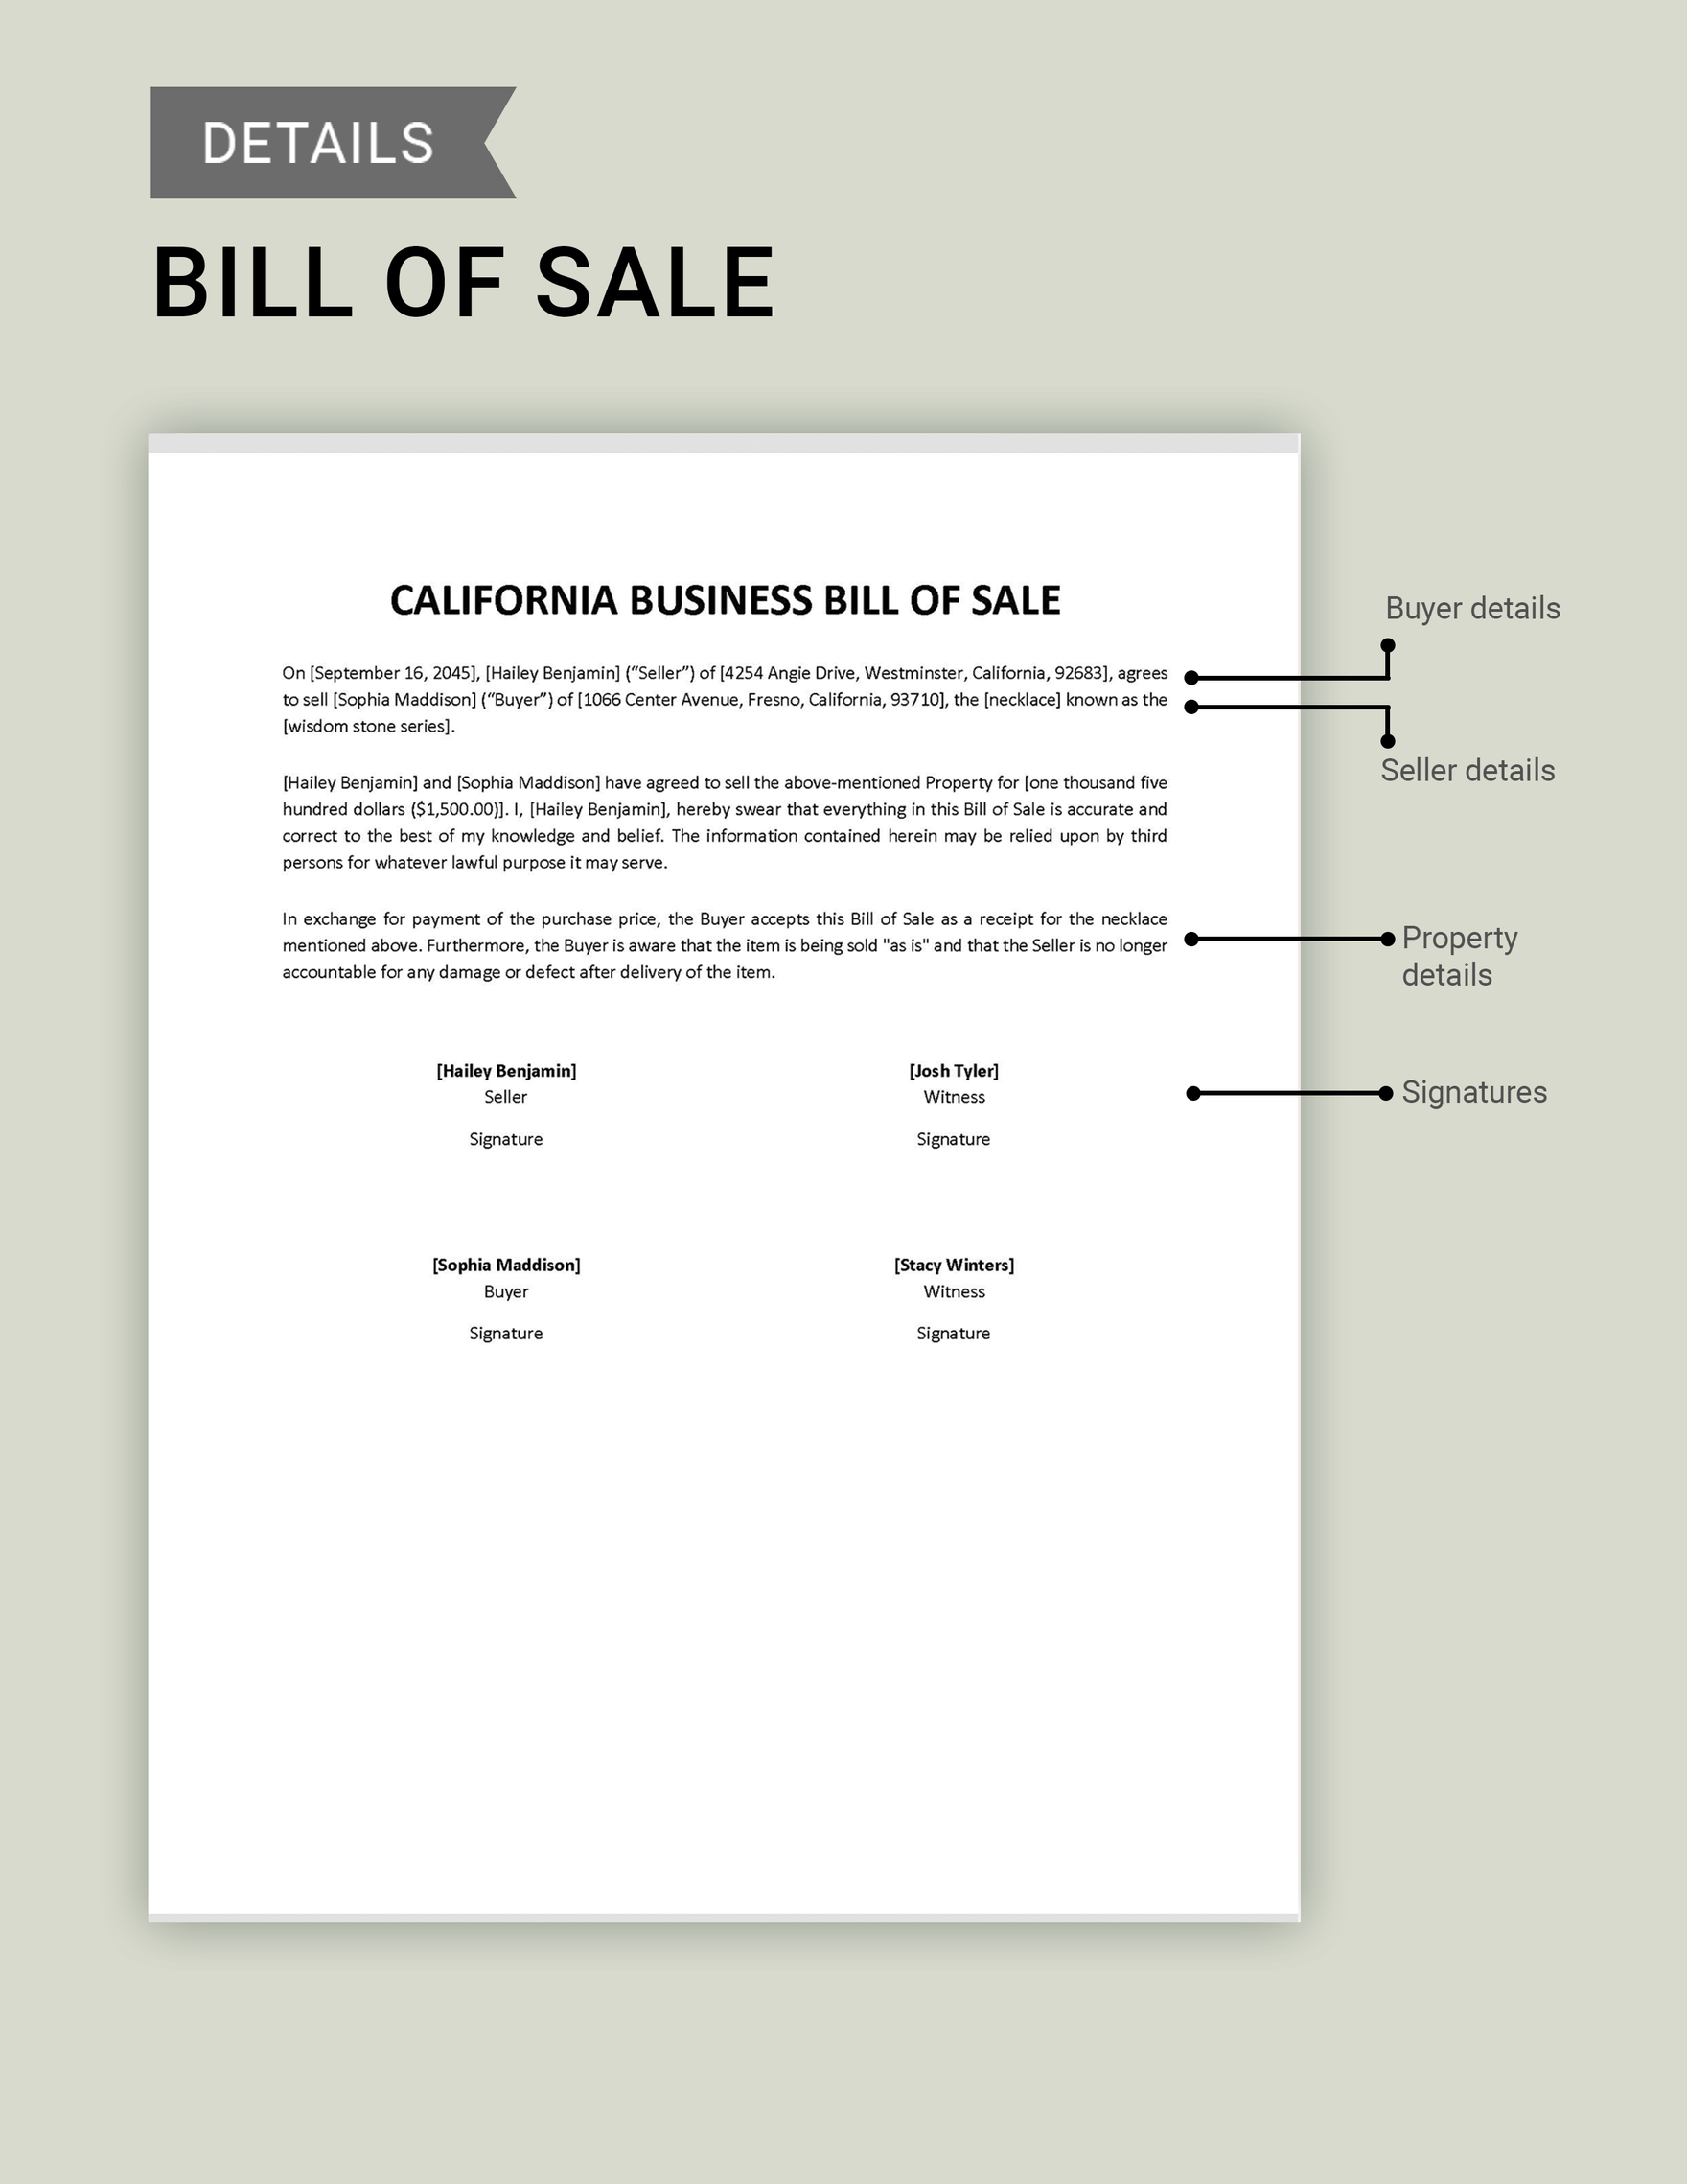 California Business Bill of Sale Template